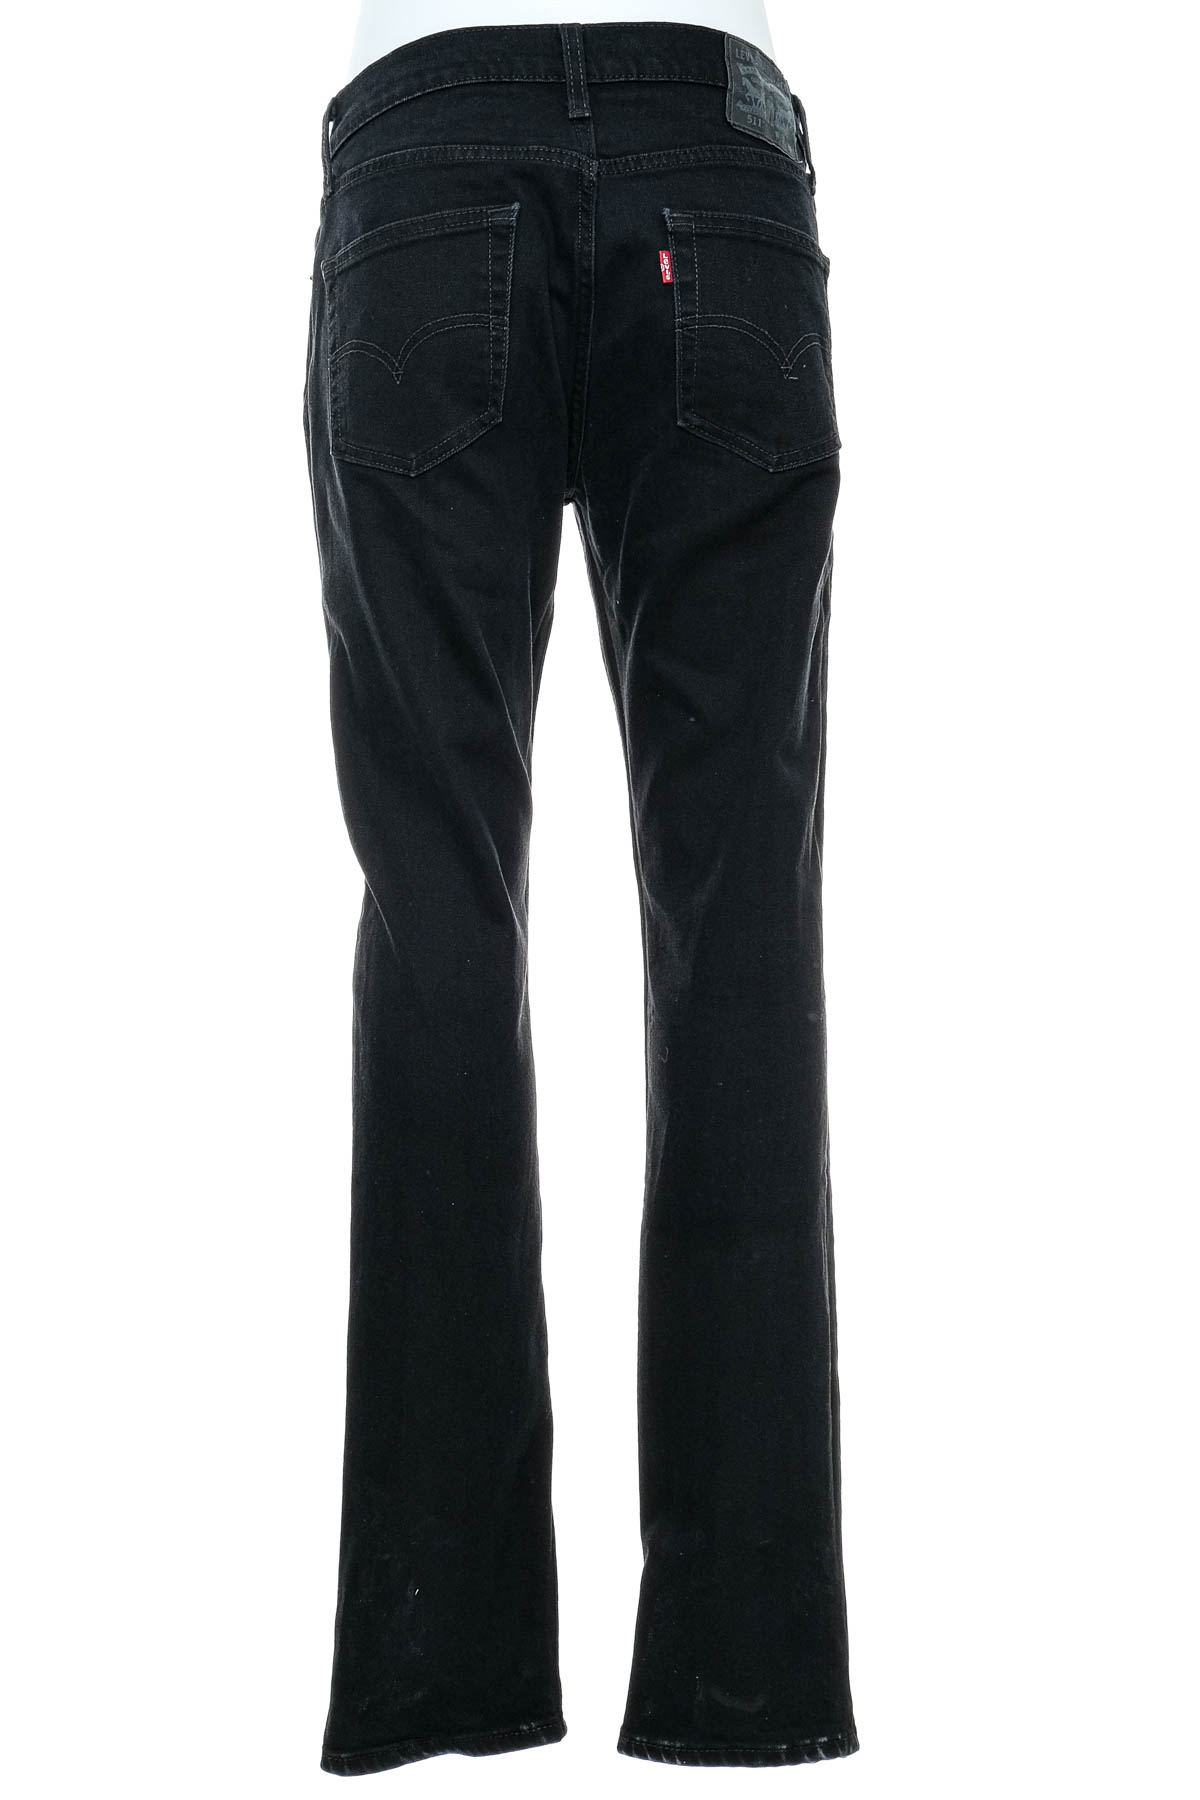 Jeans pentru bărbăți - Levi Strauss & Co. - 1